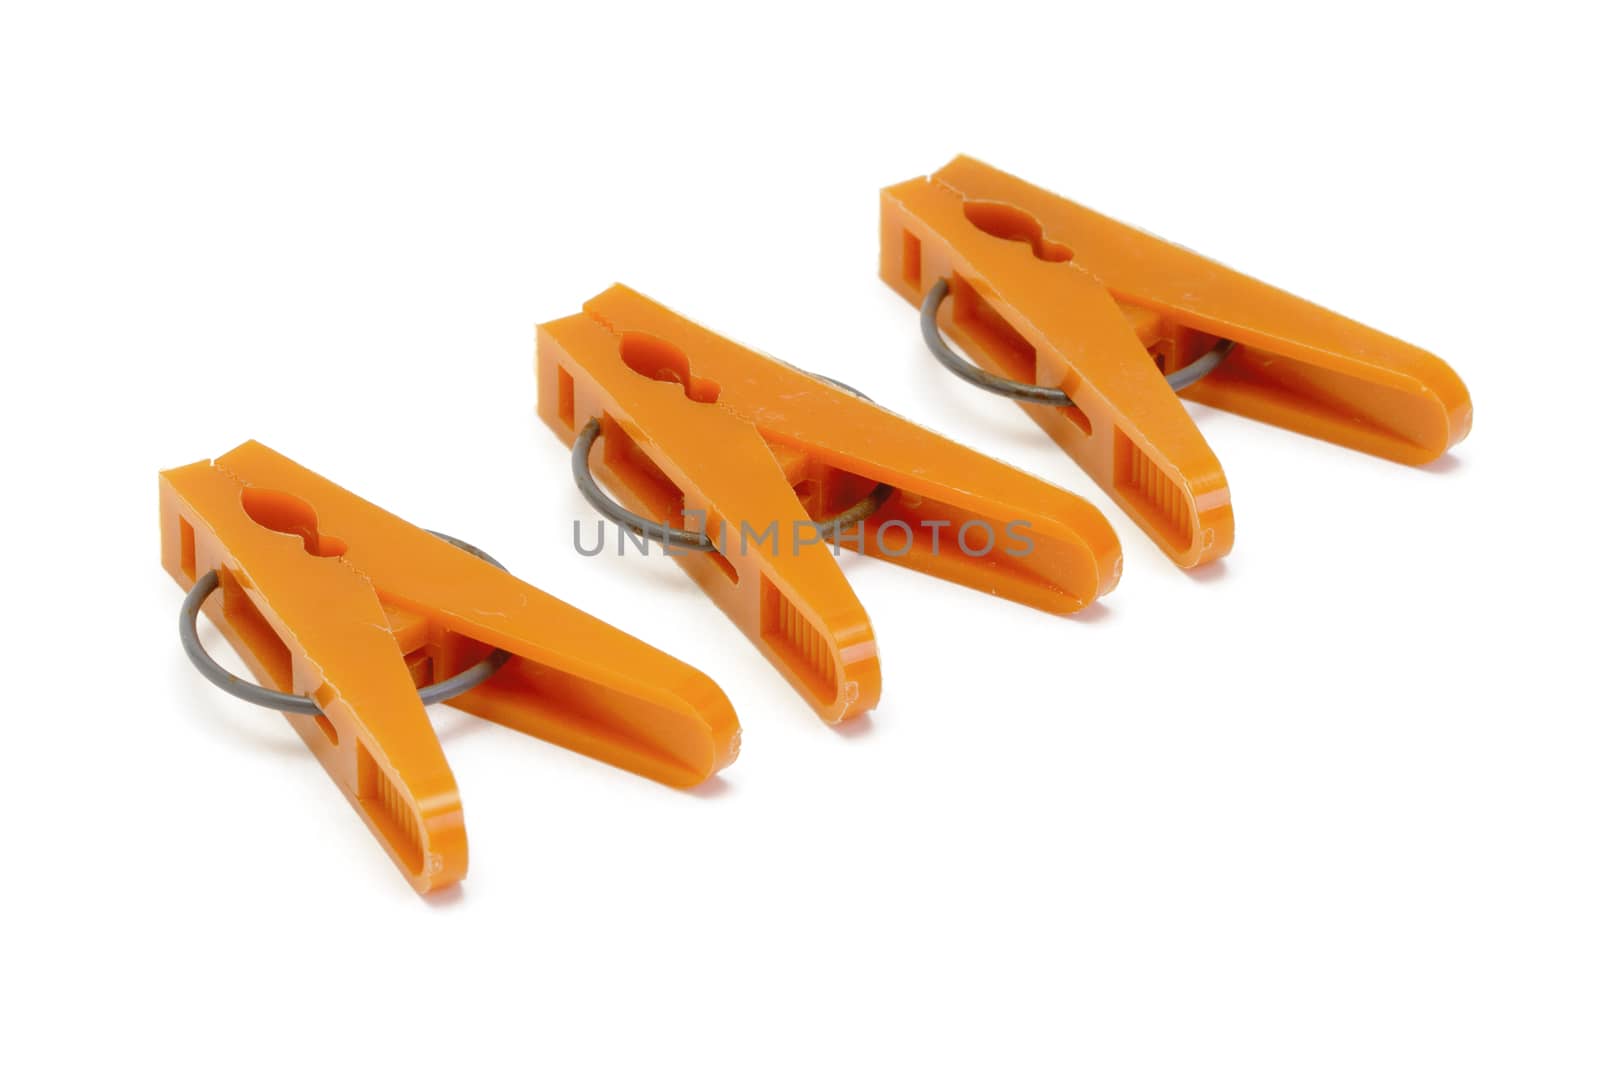 Orange plastic clothespins by marslander